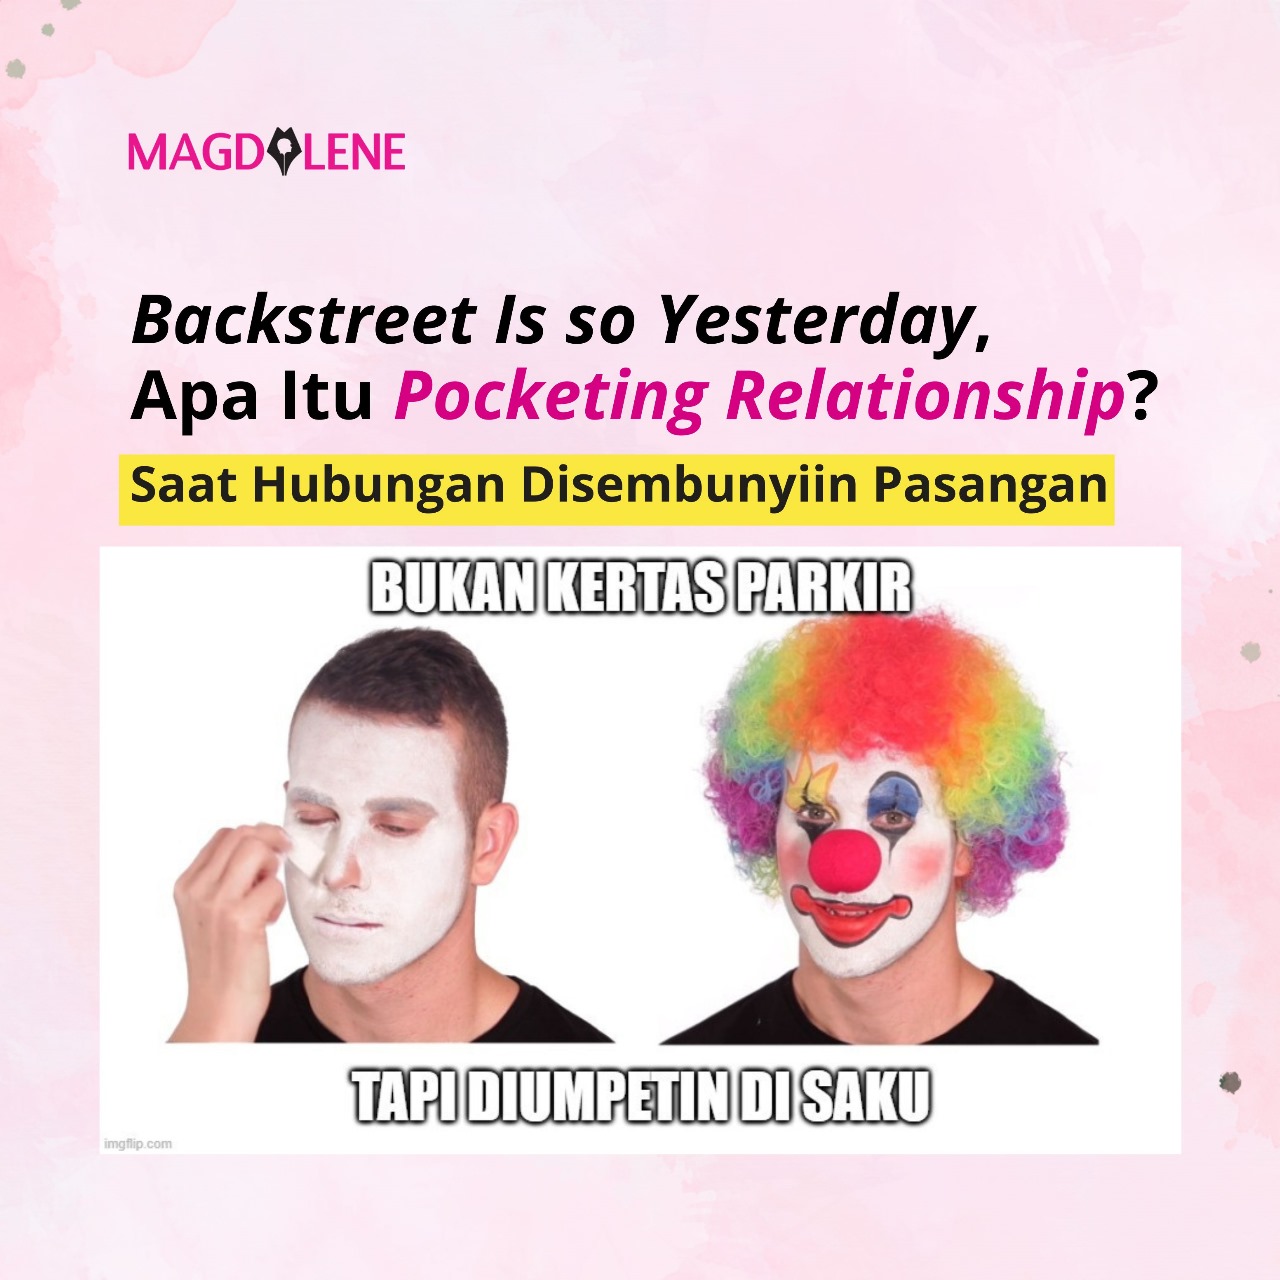 Backstreet Is so Yesterday, Apa Itu Pocketing Relationshp? Saat Hubungan Disembunyiin Pasangan?